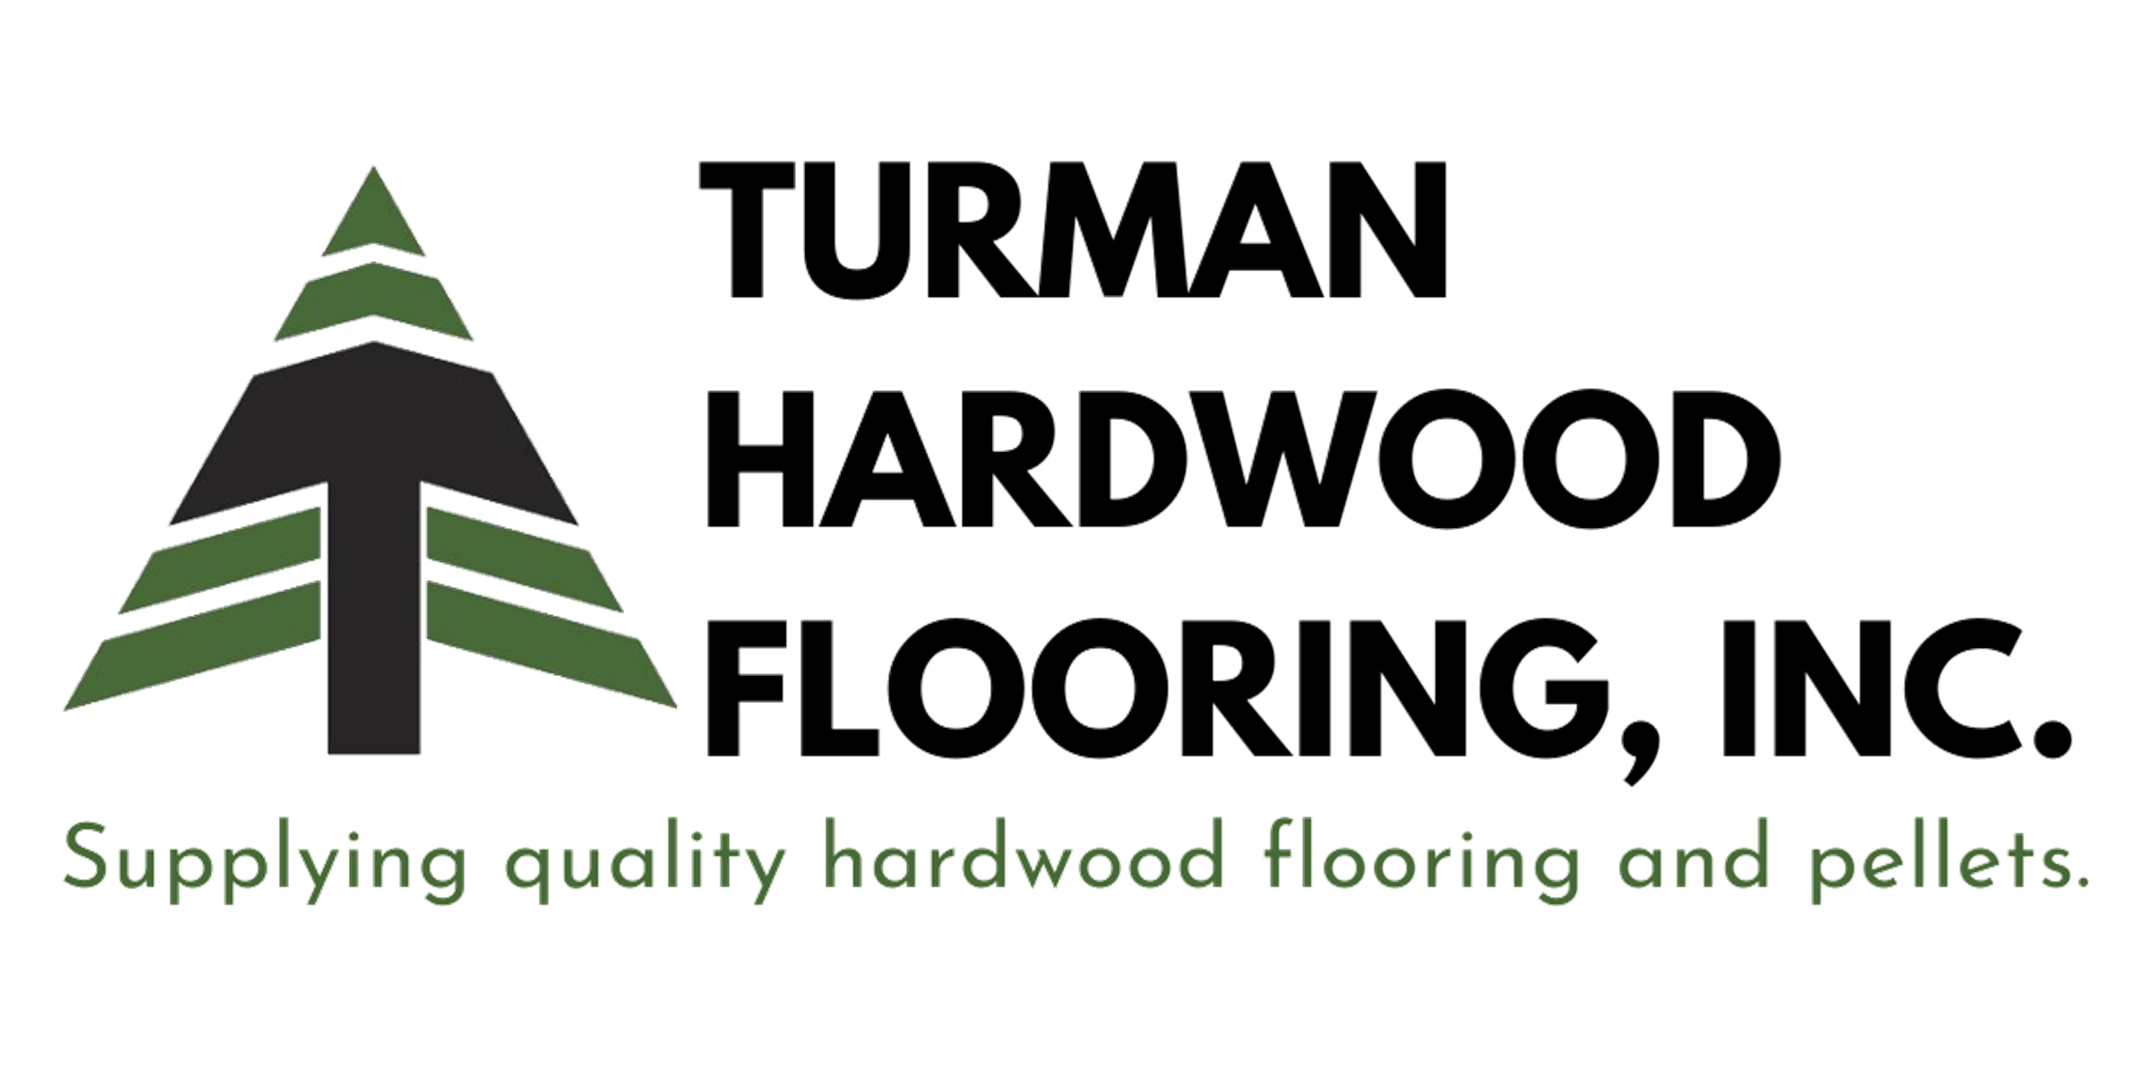 Turman Hardwood Flooring